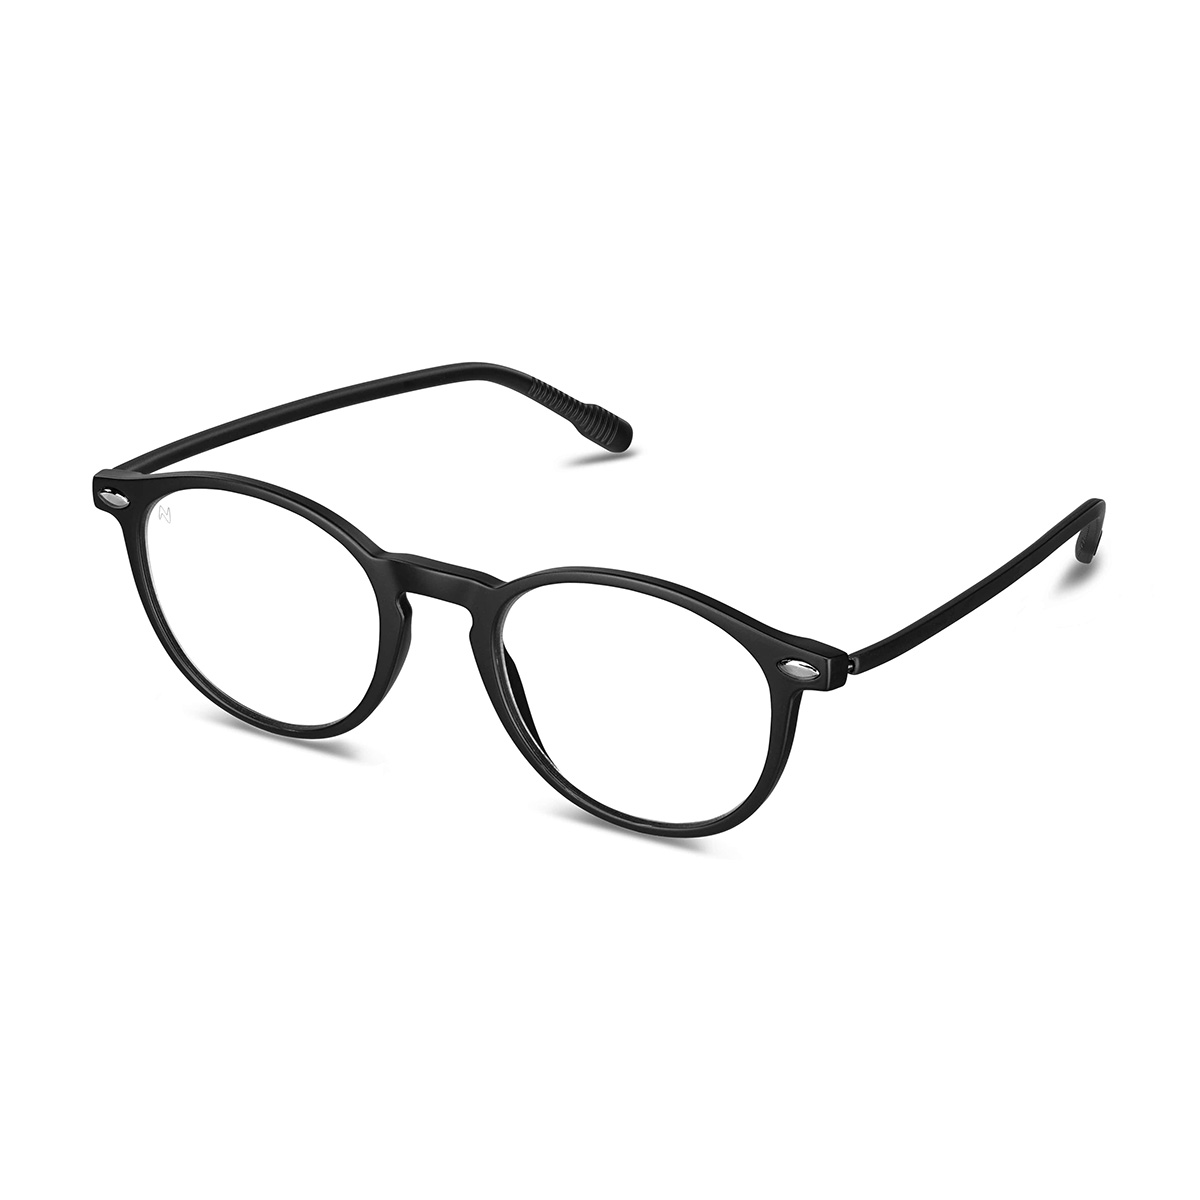 Blue anti-light glasses for children Essential Cruzy Black from side